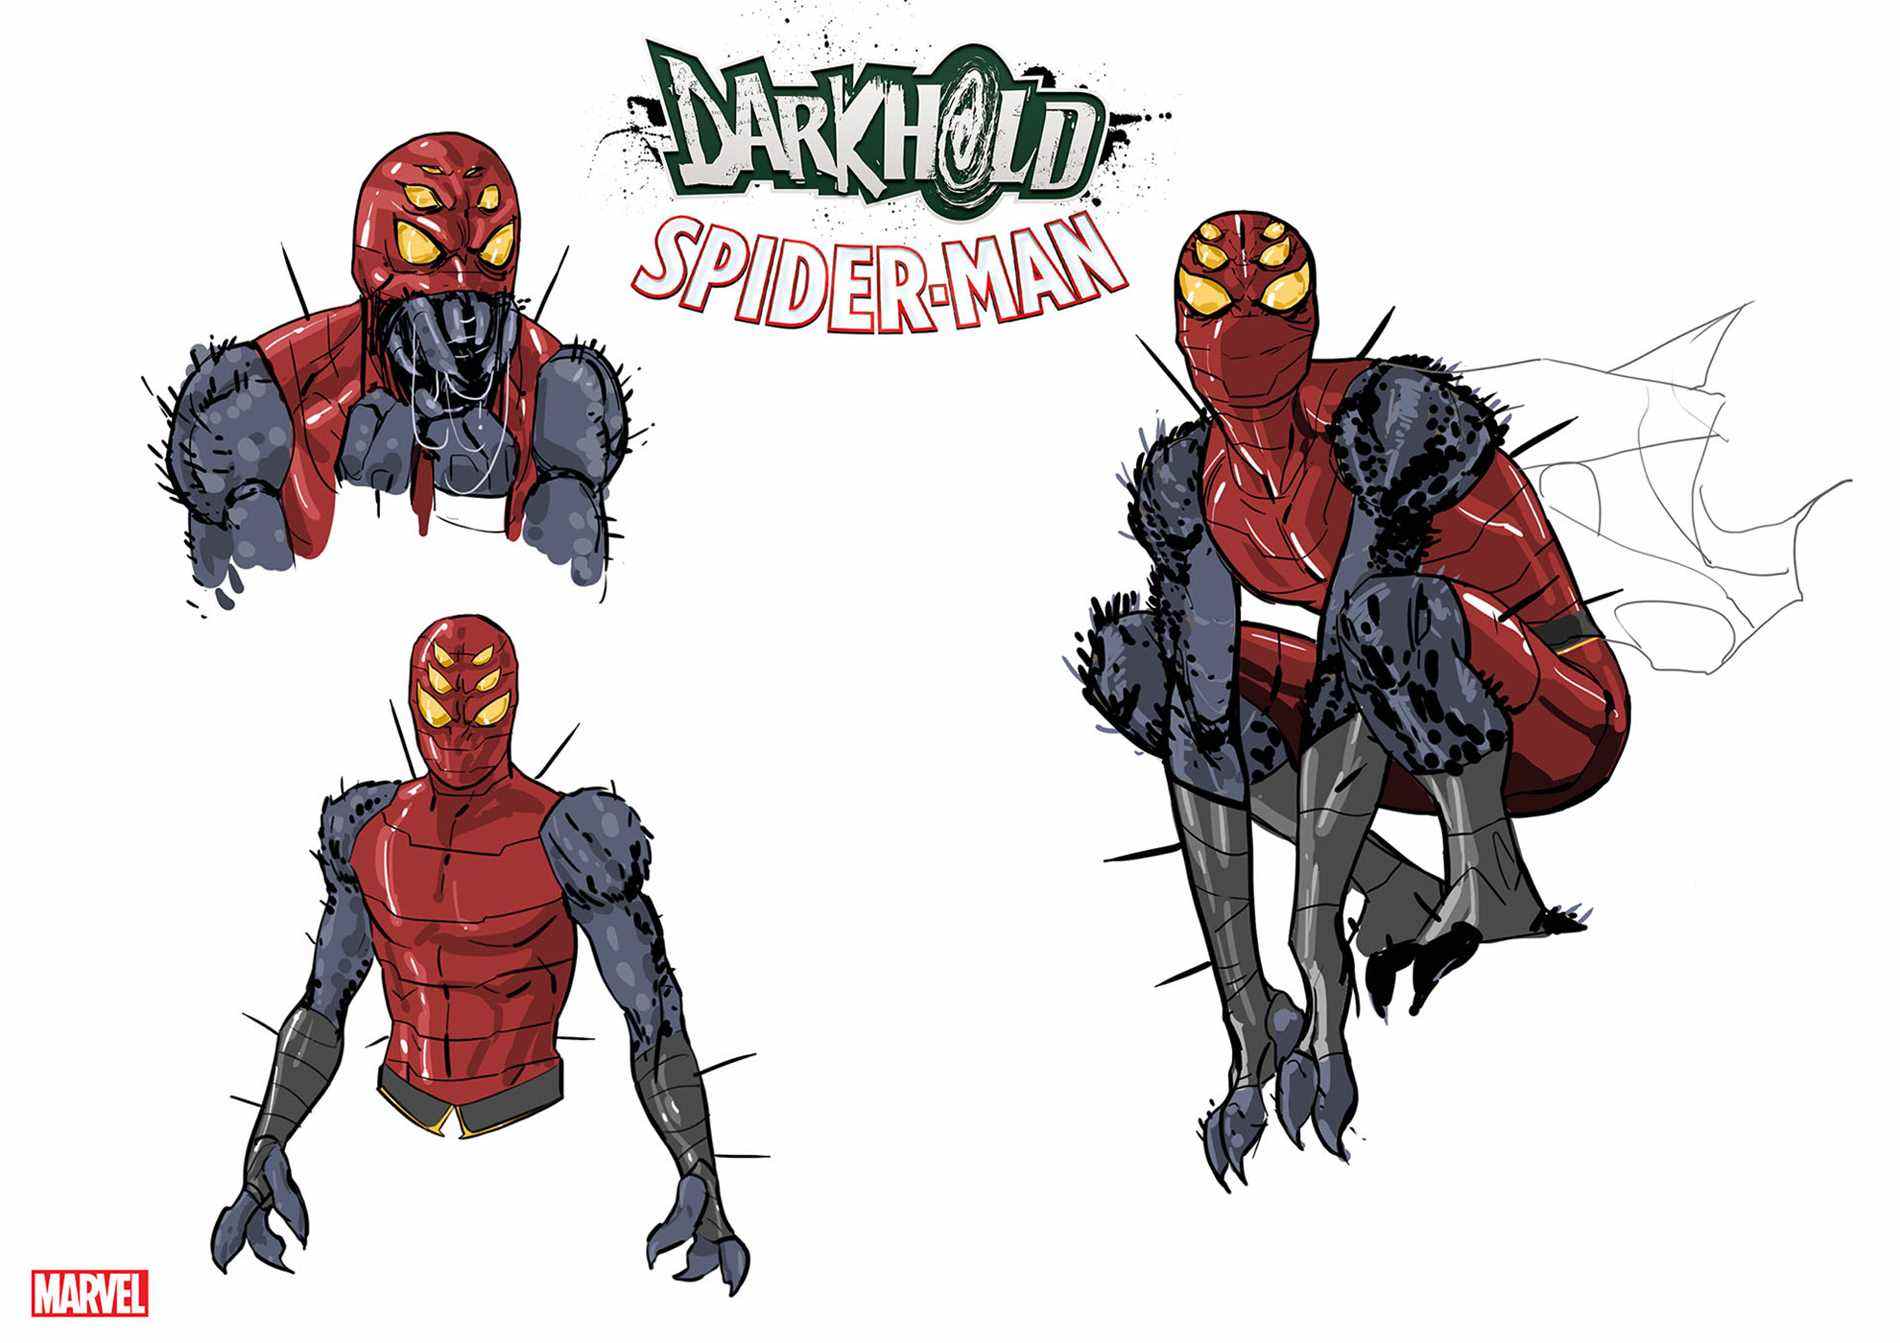 Couverture de The Darkhold : Spider-Man #1